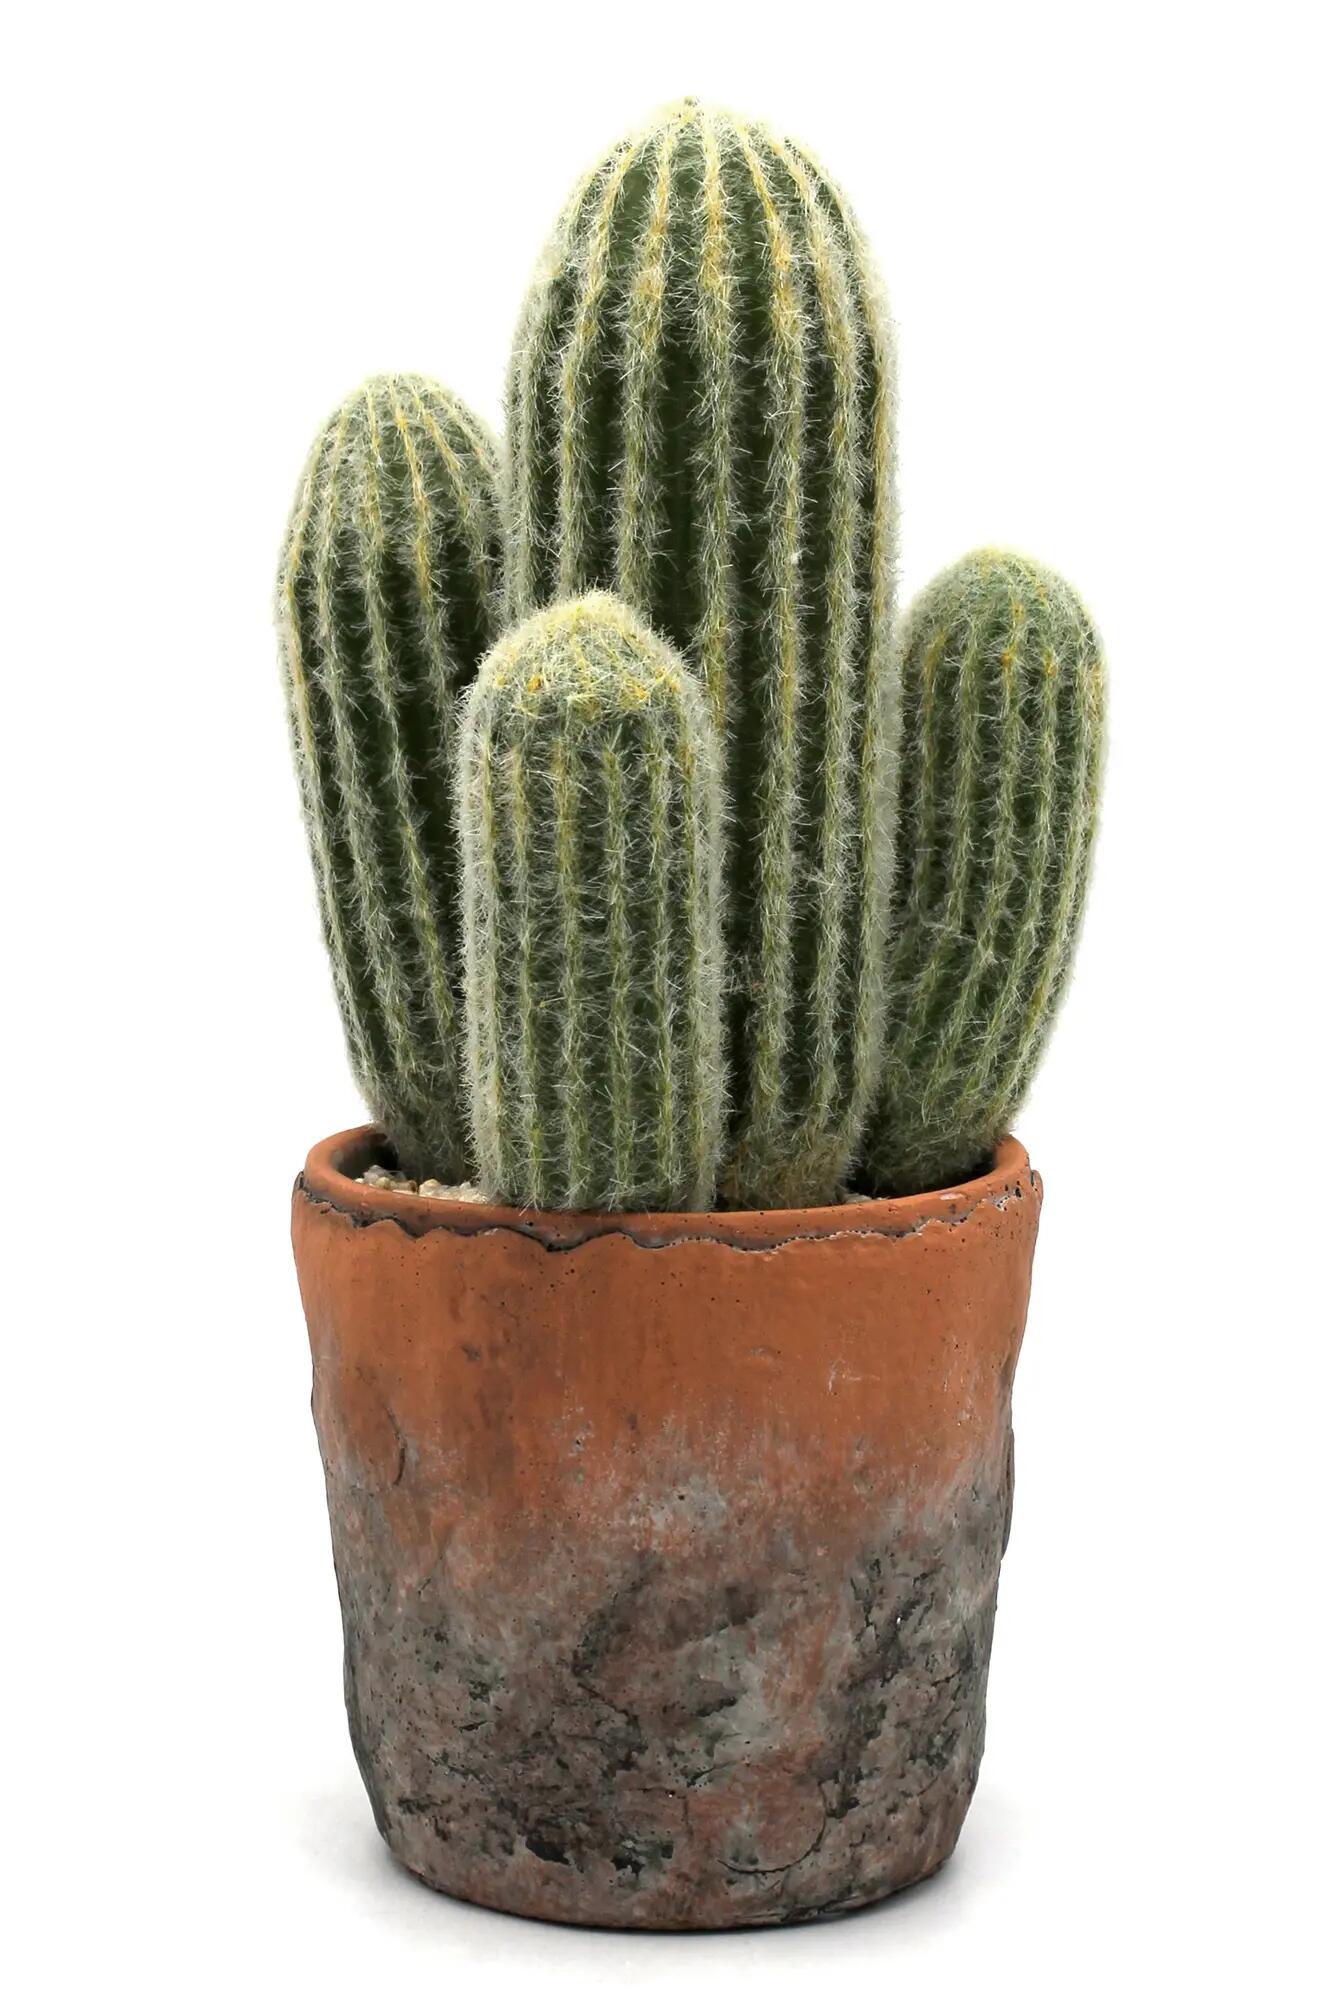 Planta artificial cactus de 31 cm de altura en maceta de 13 cm